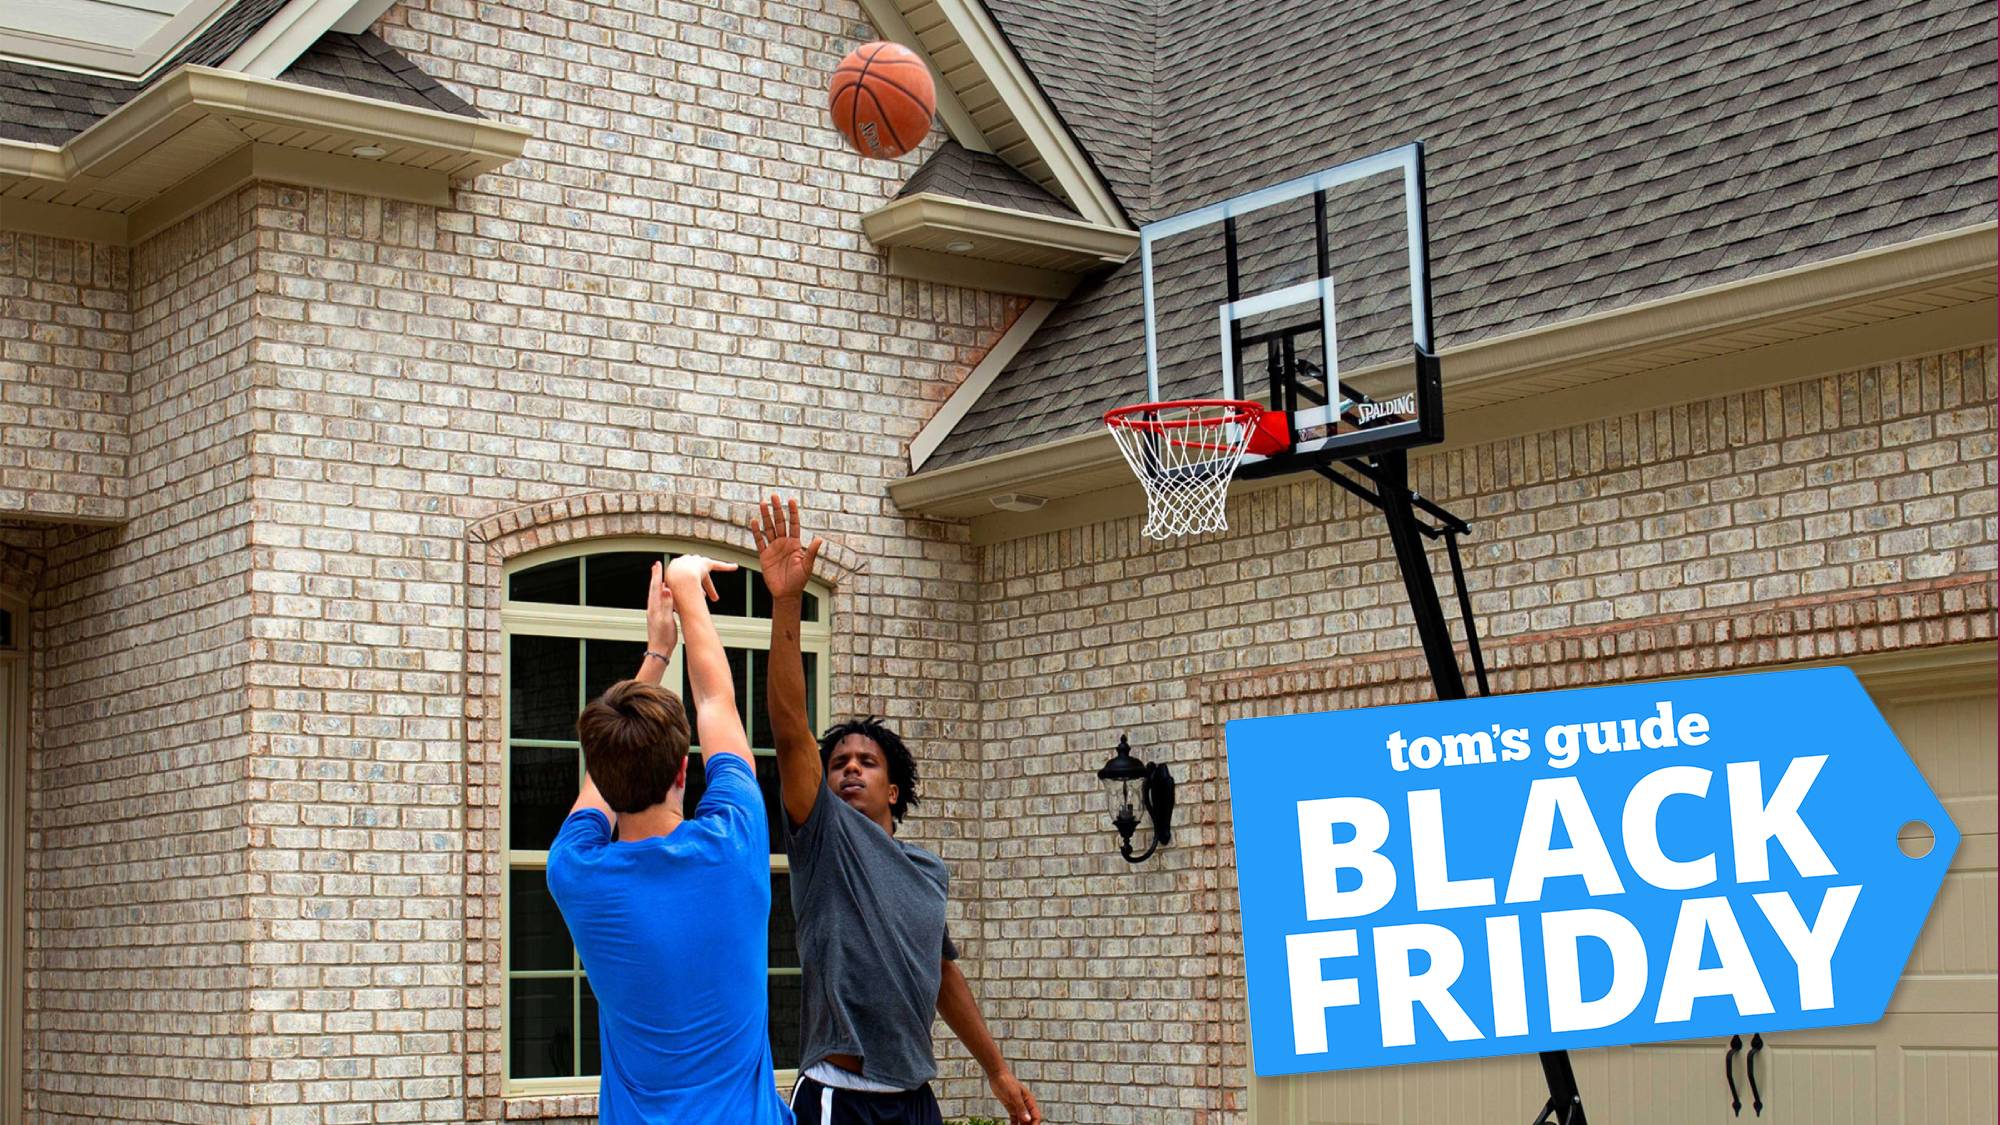 Spalding 54-inch Basketball Hoop in a driveway